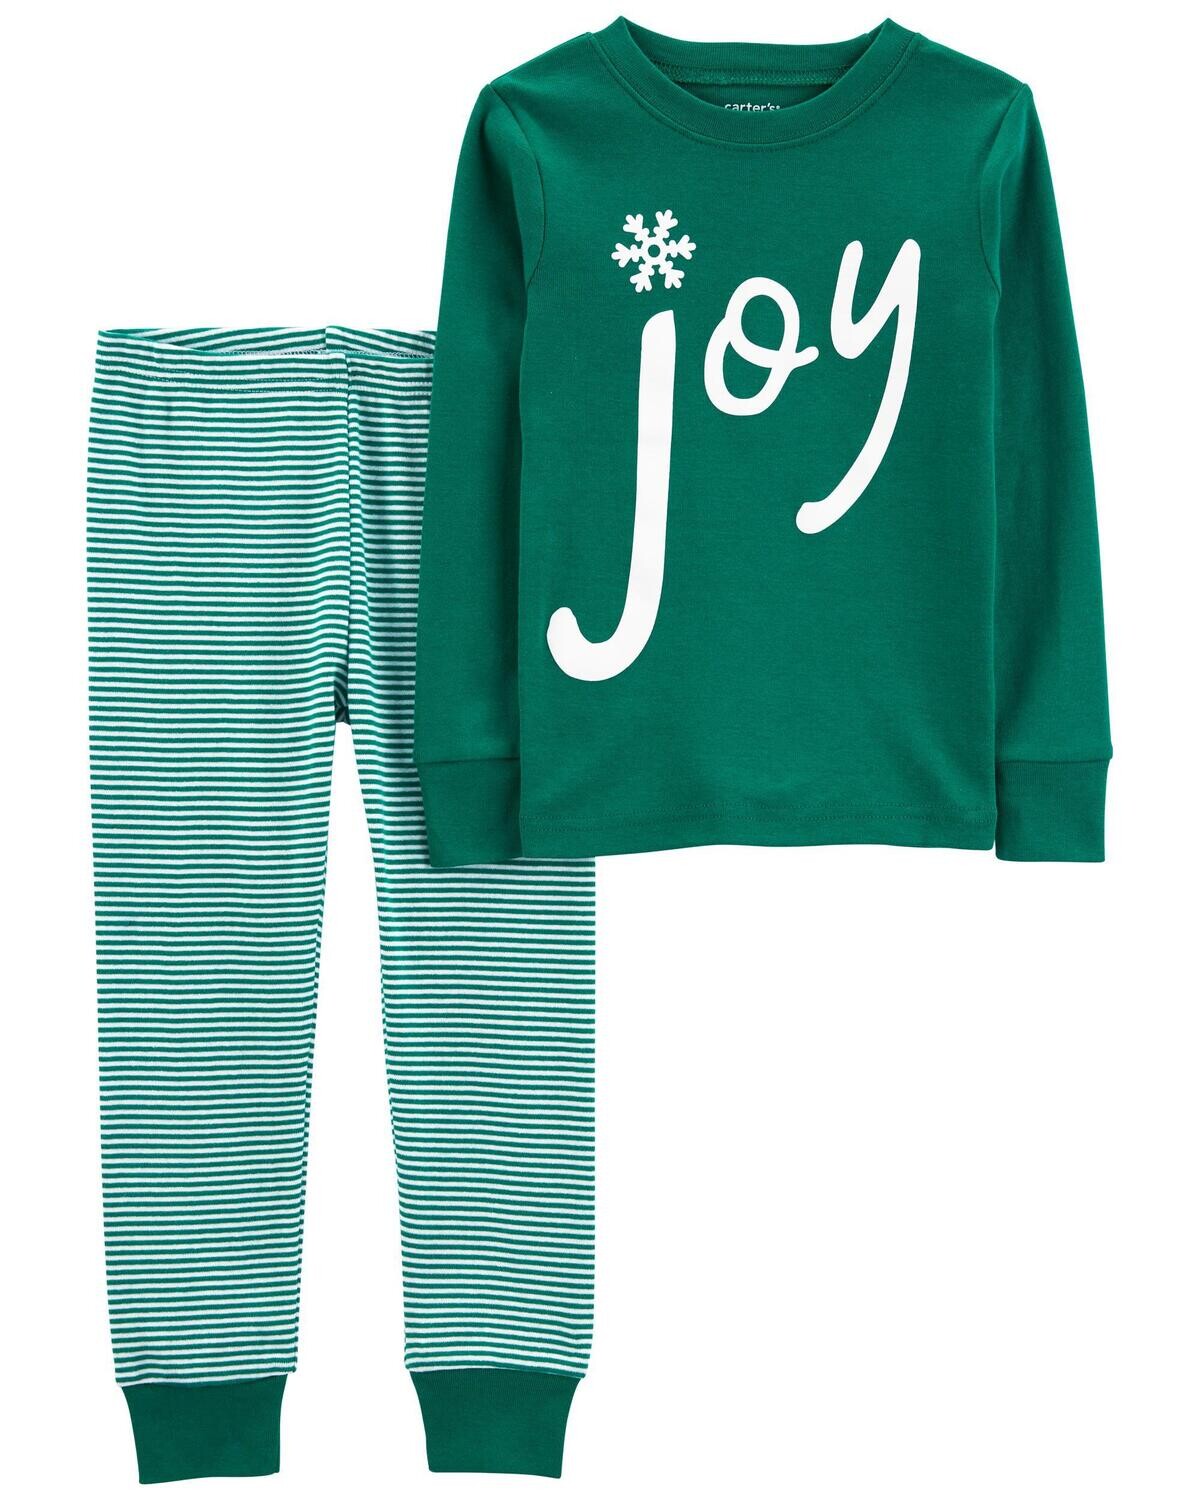 Original Carter's  2-Piece Holiday 100% Snug Fit Cotton PJs